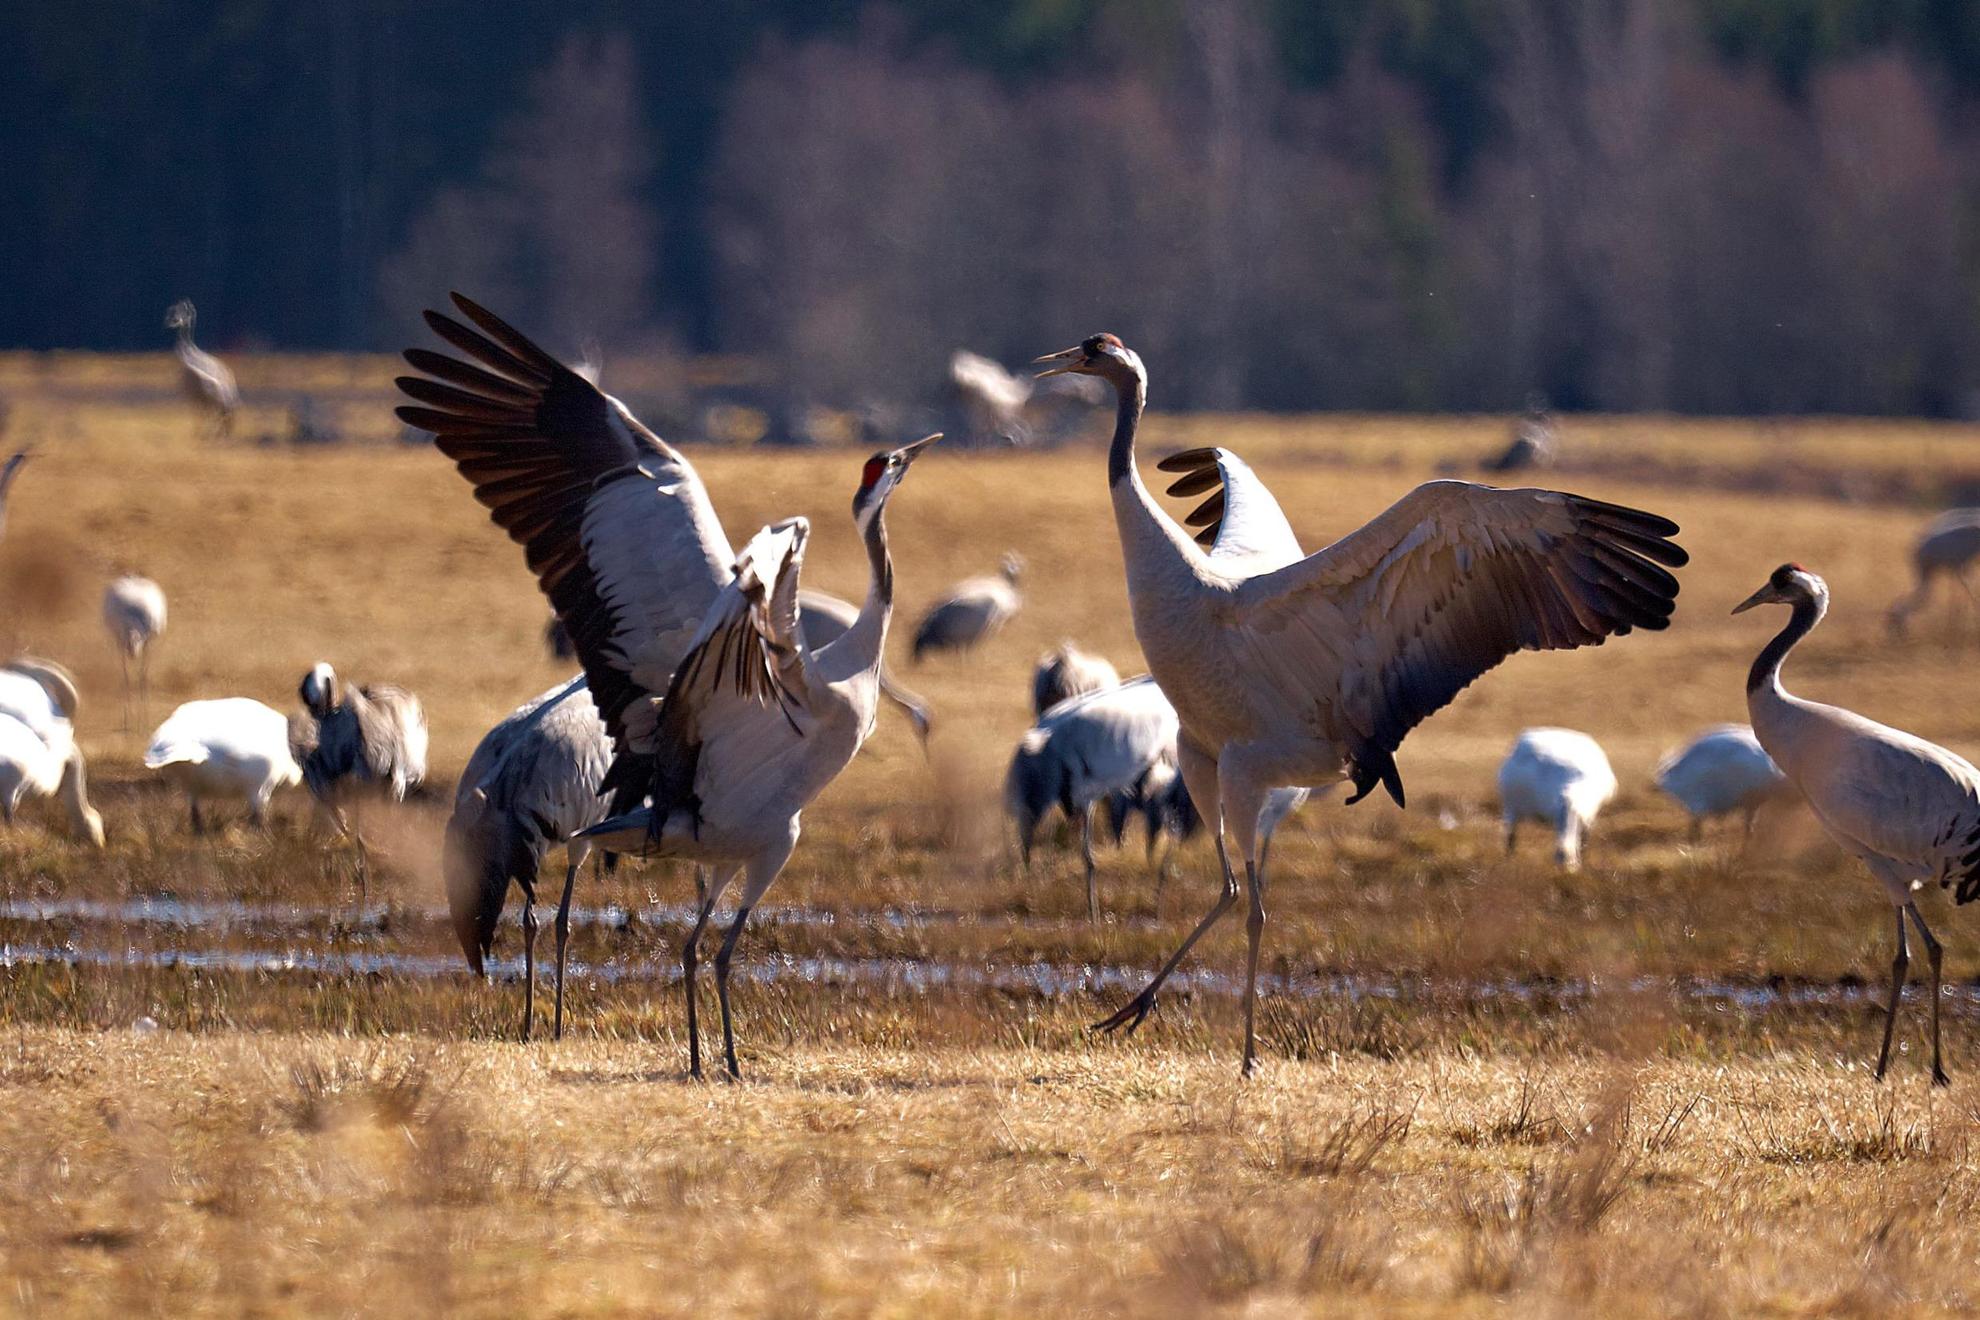 Dancing cranes by Hornborgarsjön, West Sweden